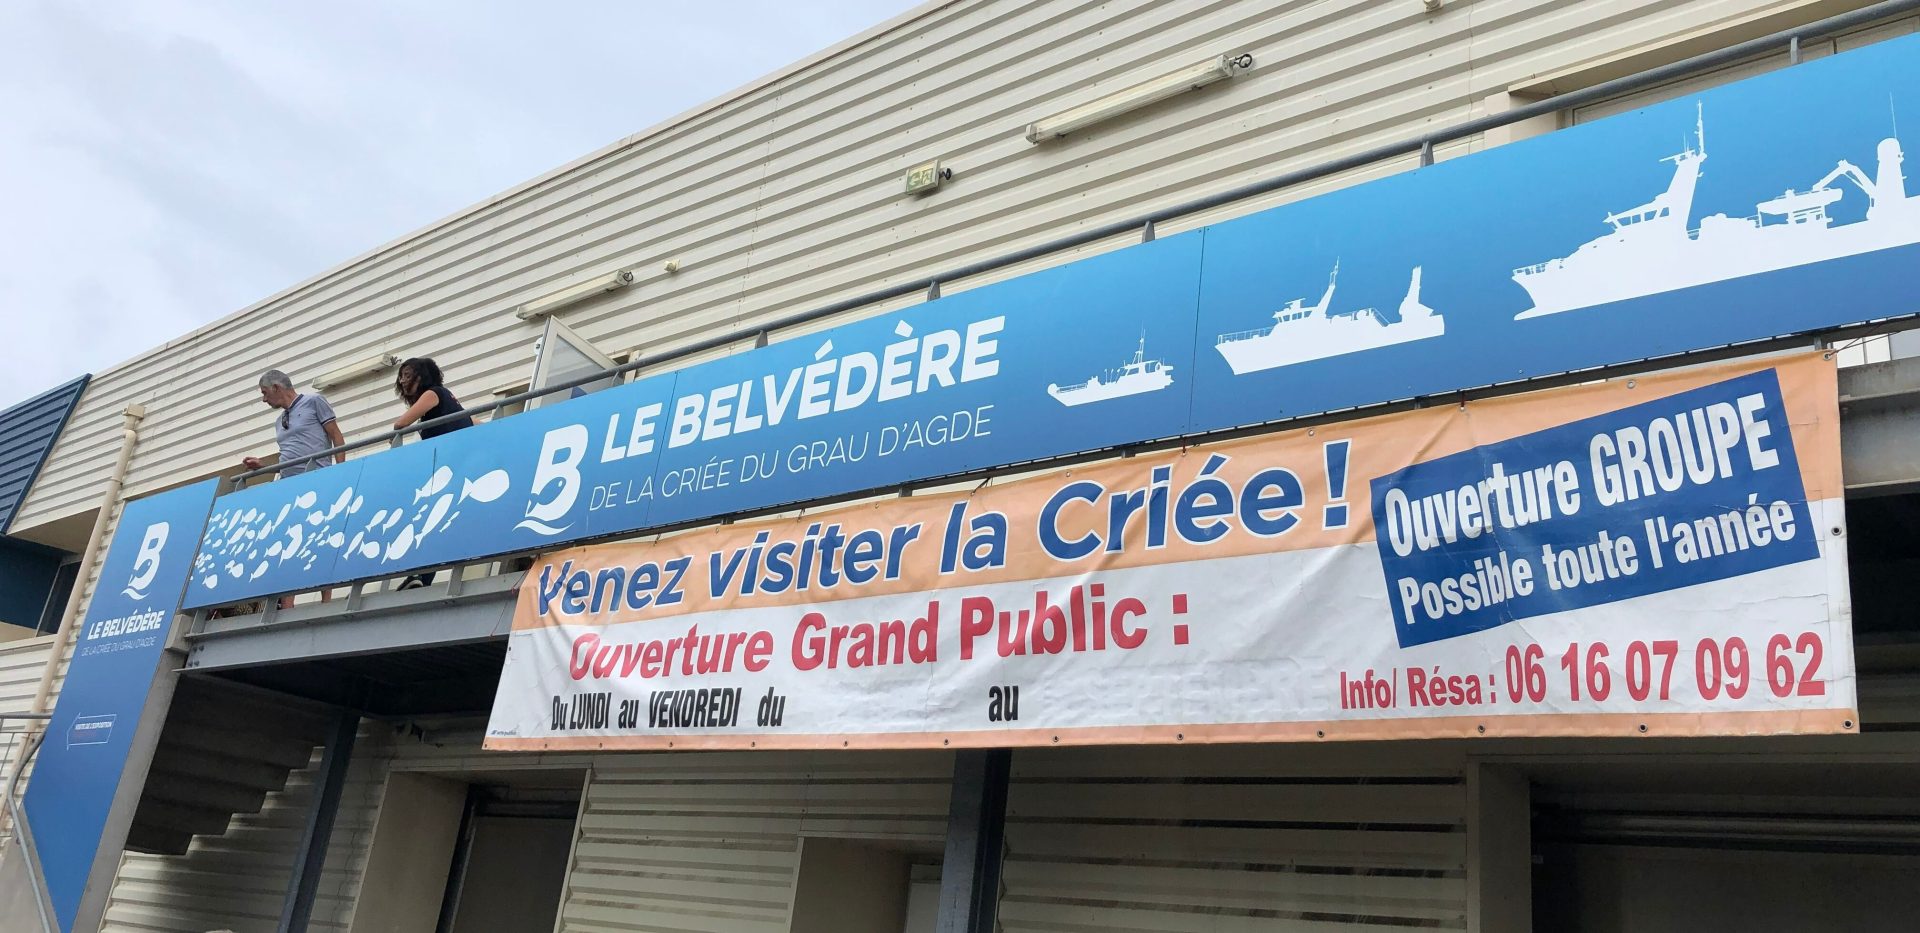 Belvedere-Agde